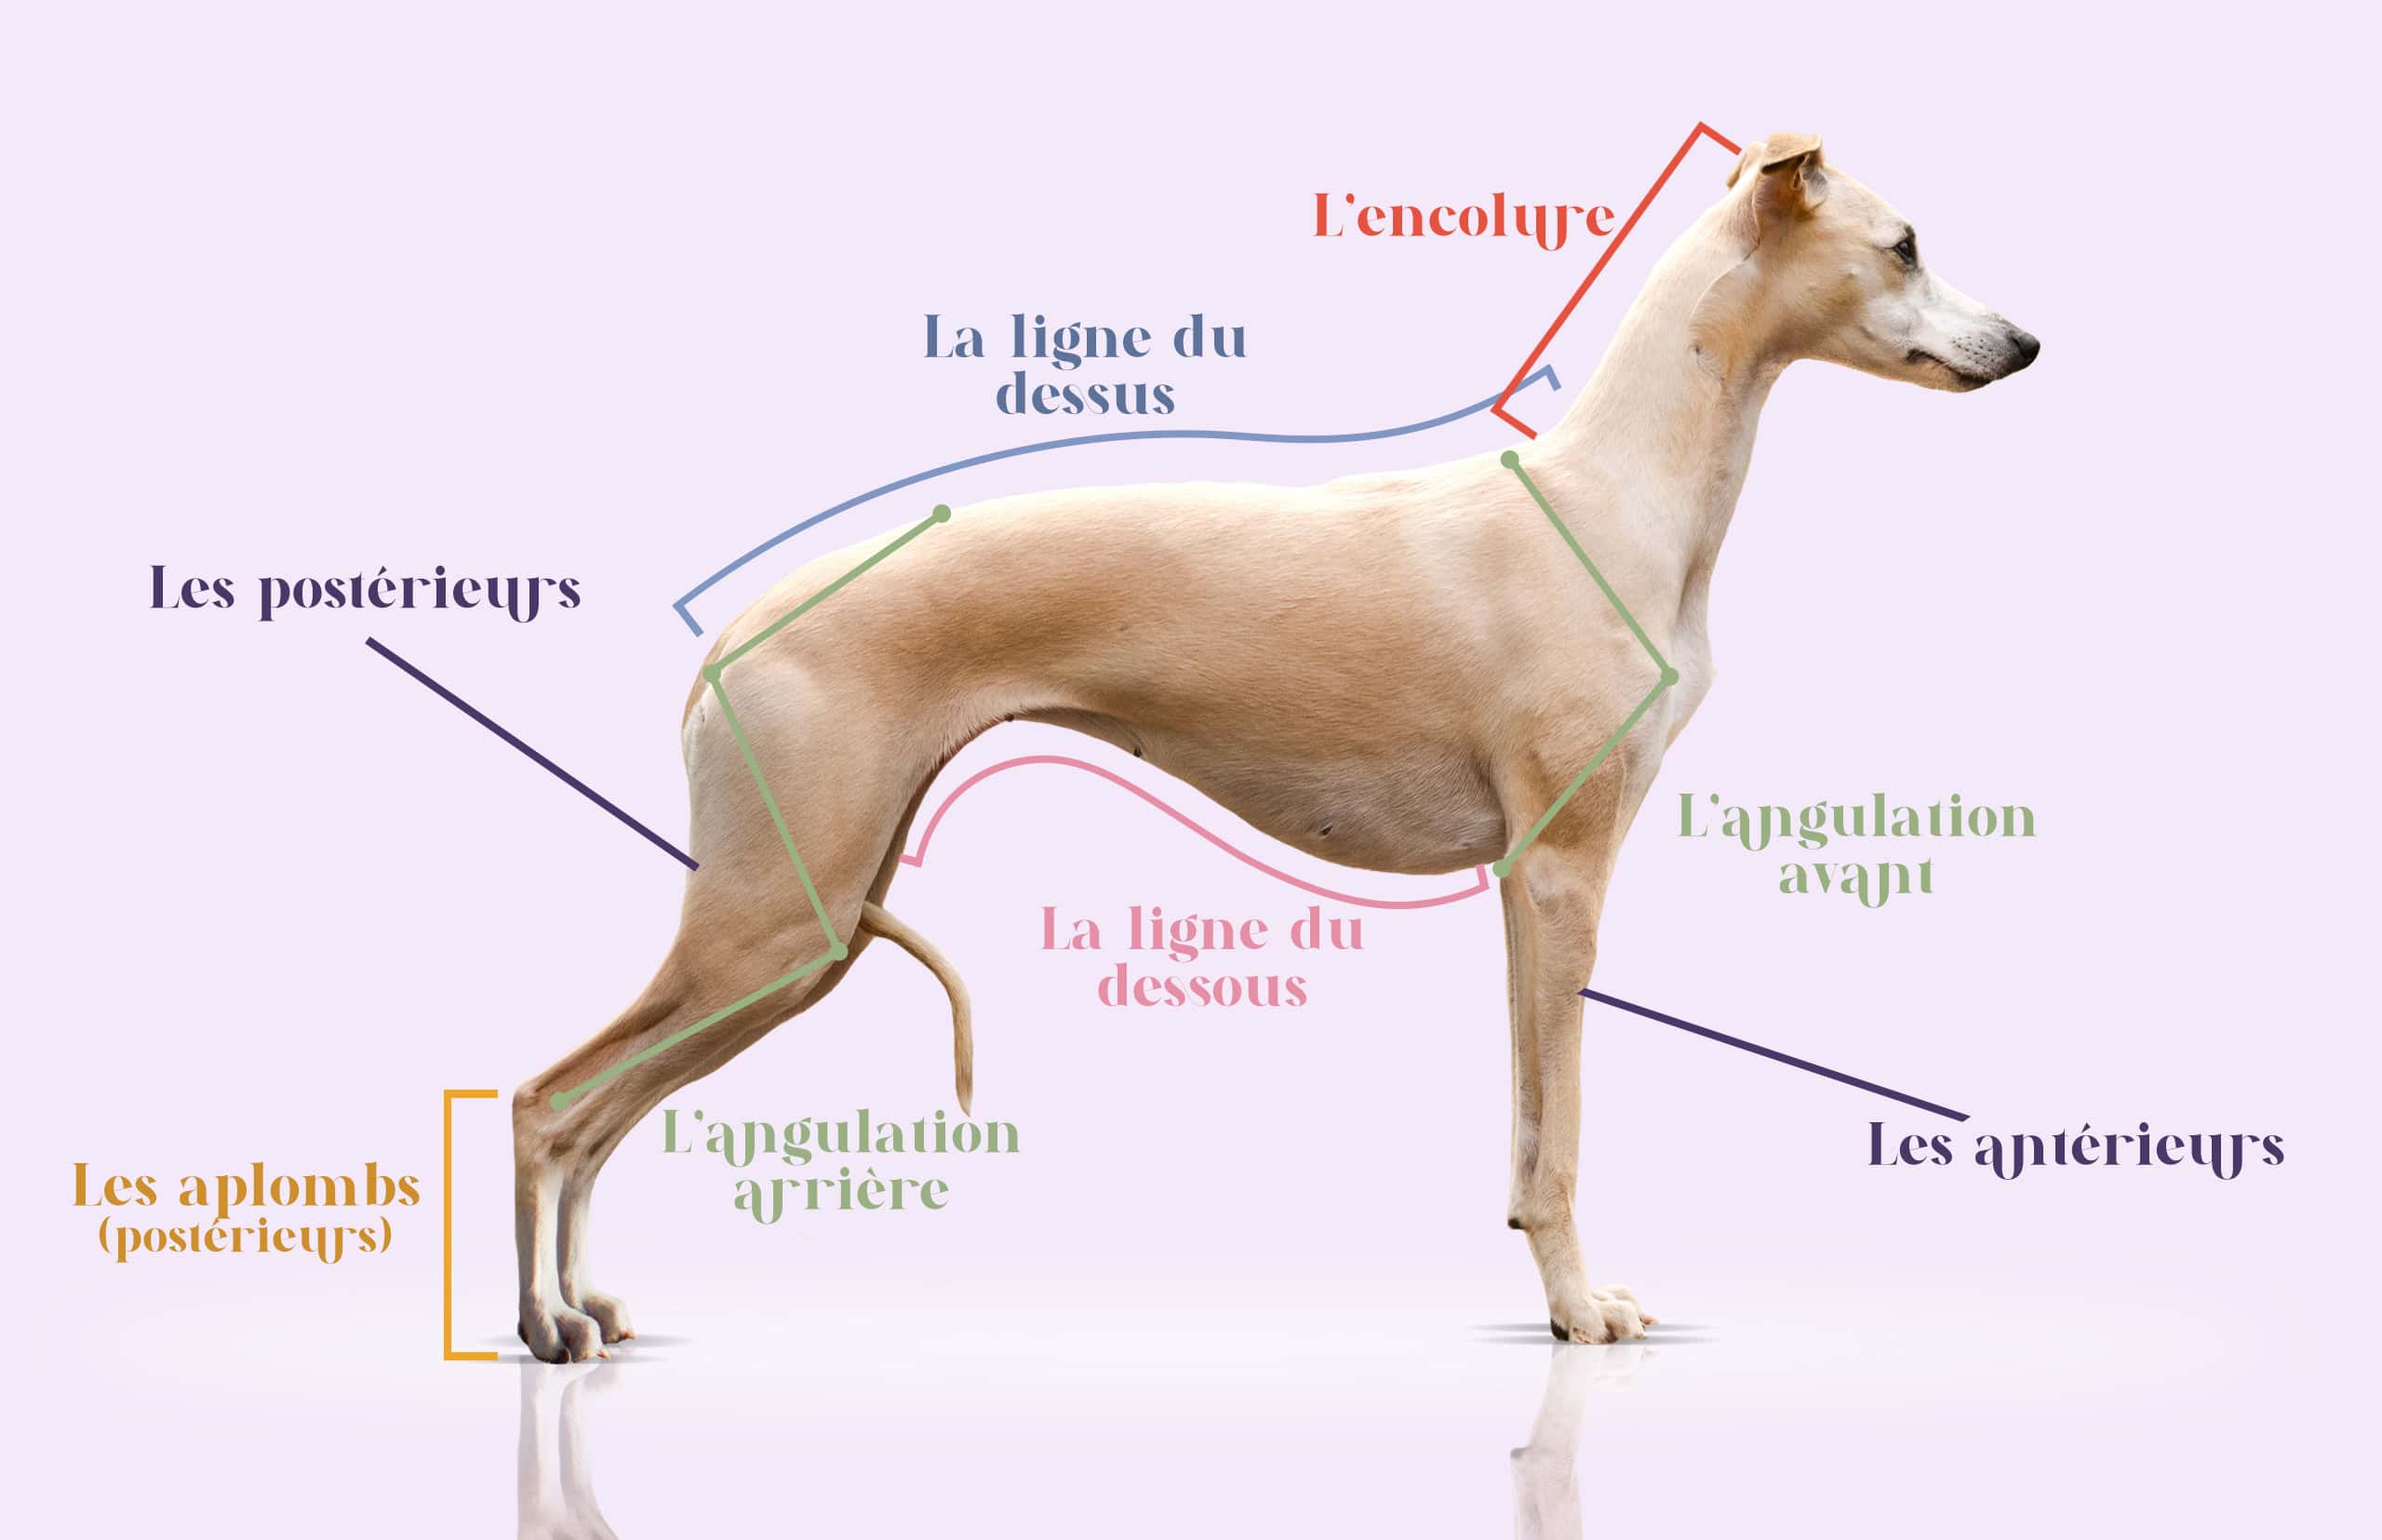 Anatomie et vocabulaire exposition canine whippet